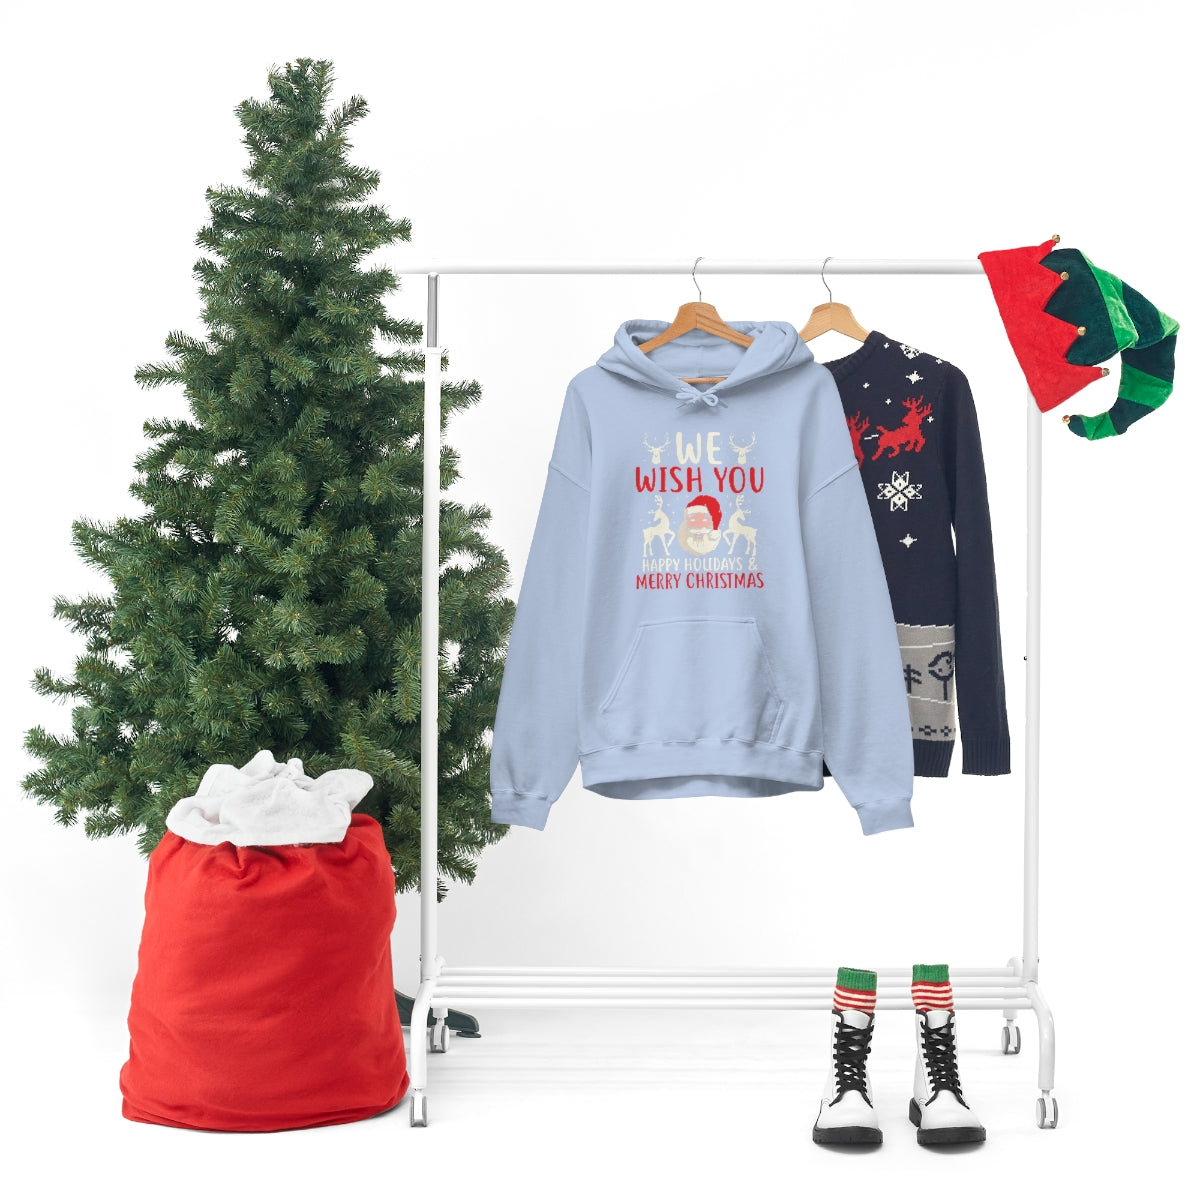 Merry Christmas Hoodie Unisex Custom Hoodie , Hooded Sweatshirt , WE WISH YOU HAPPY HOLIDAYS & MERRY CHRISTMAS Printify